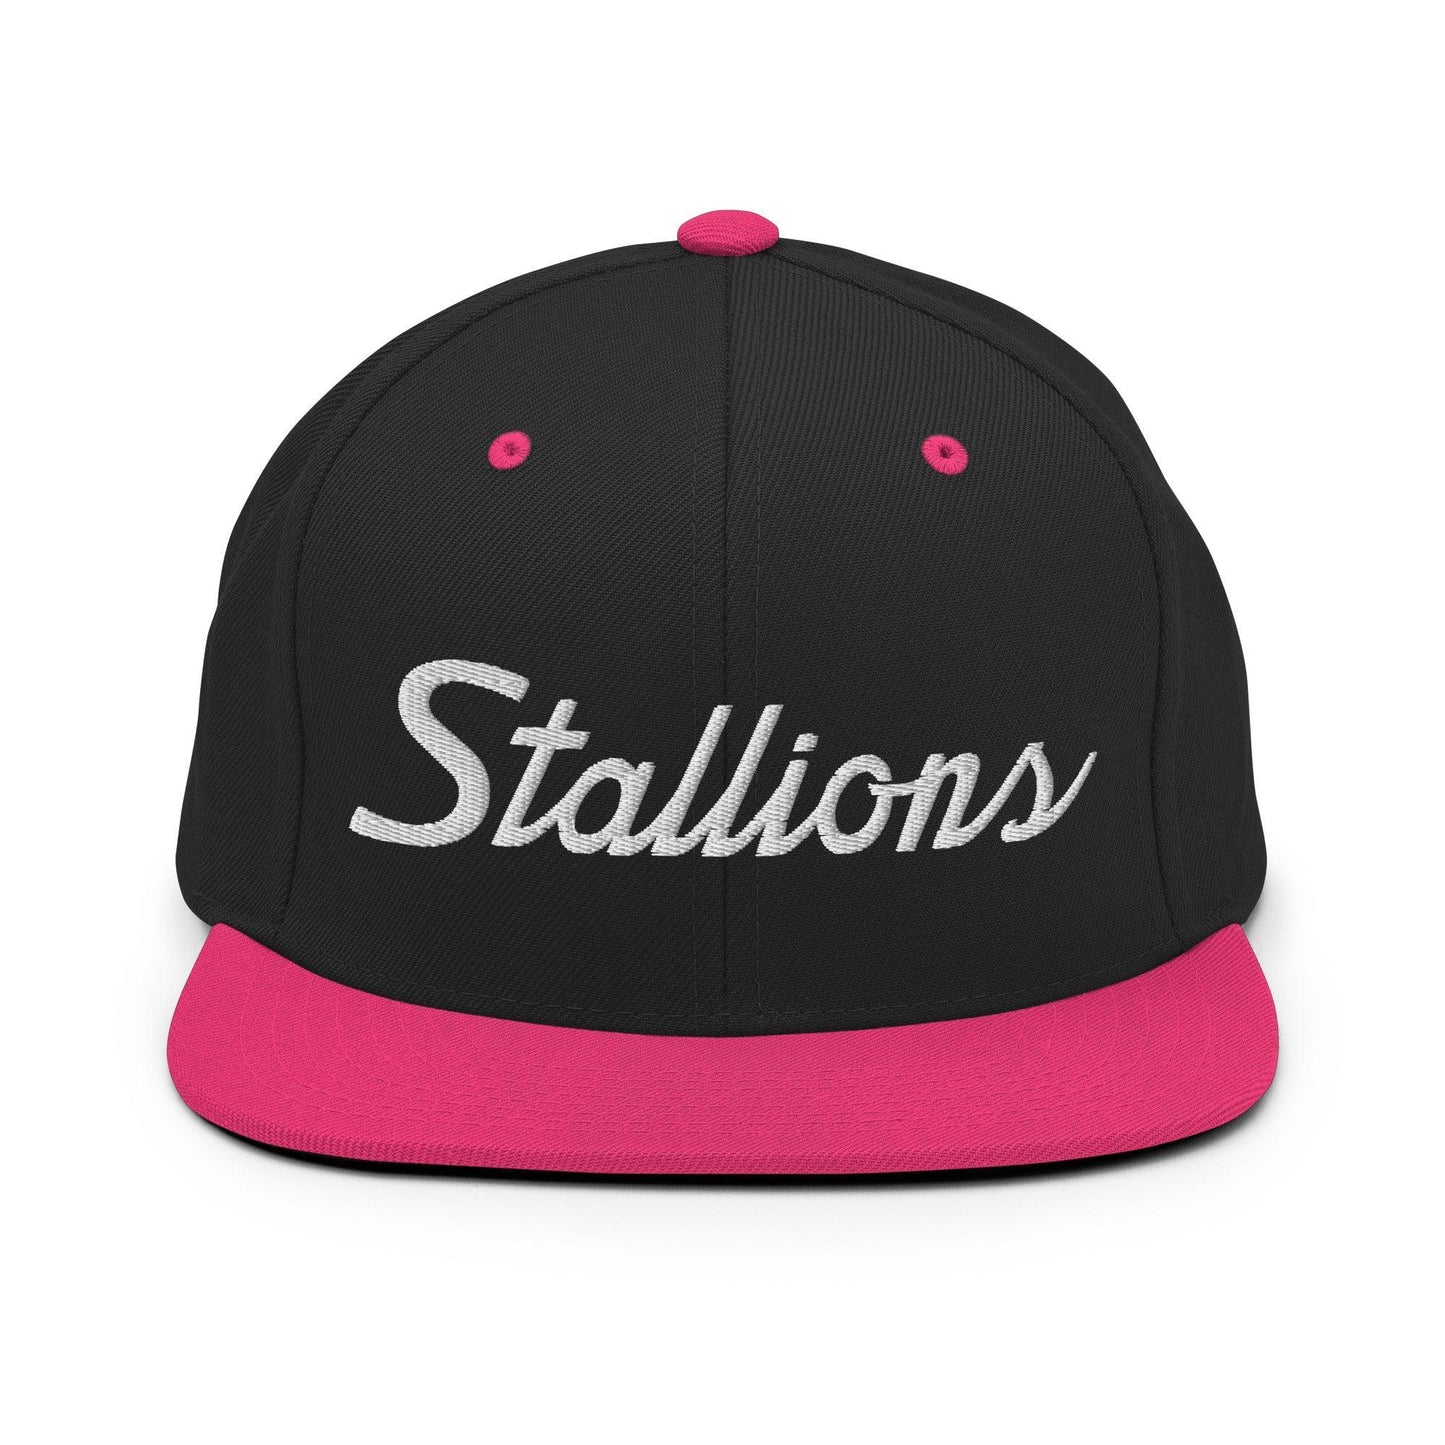 Stallions School Mascot Script Snapback Hat Black/ Neon Pink